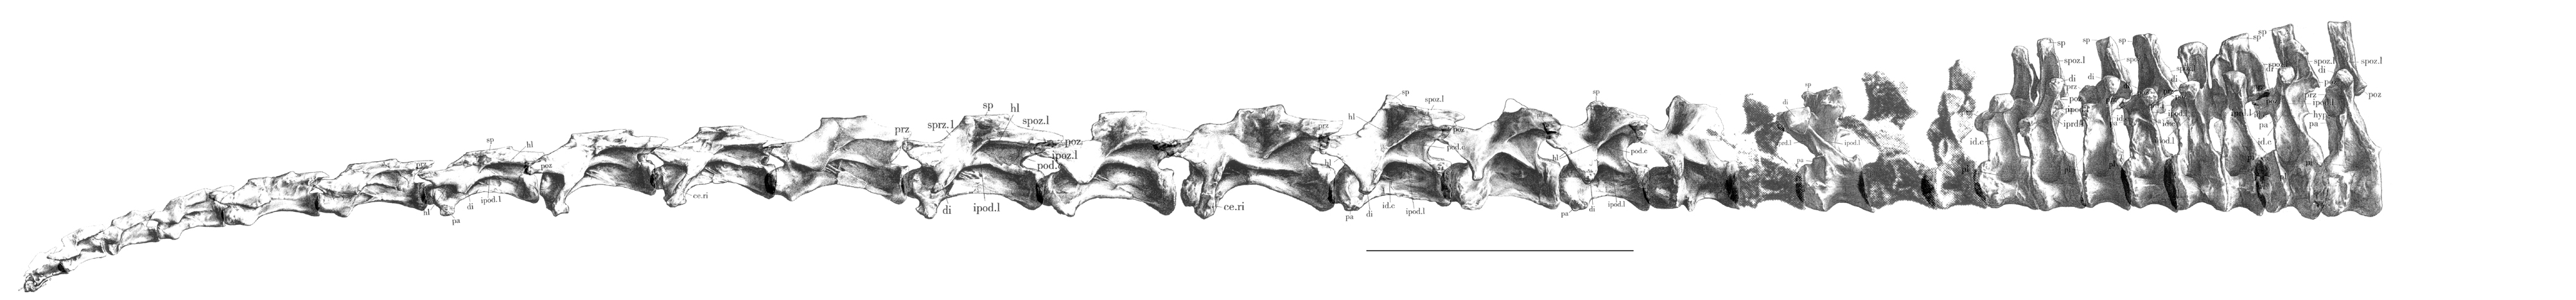 Mamenchisaurus presacral series